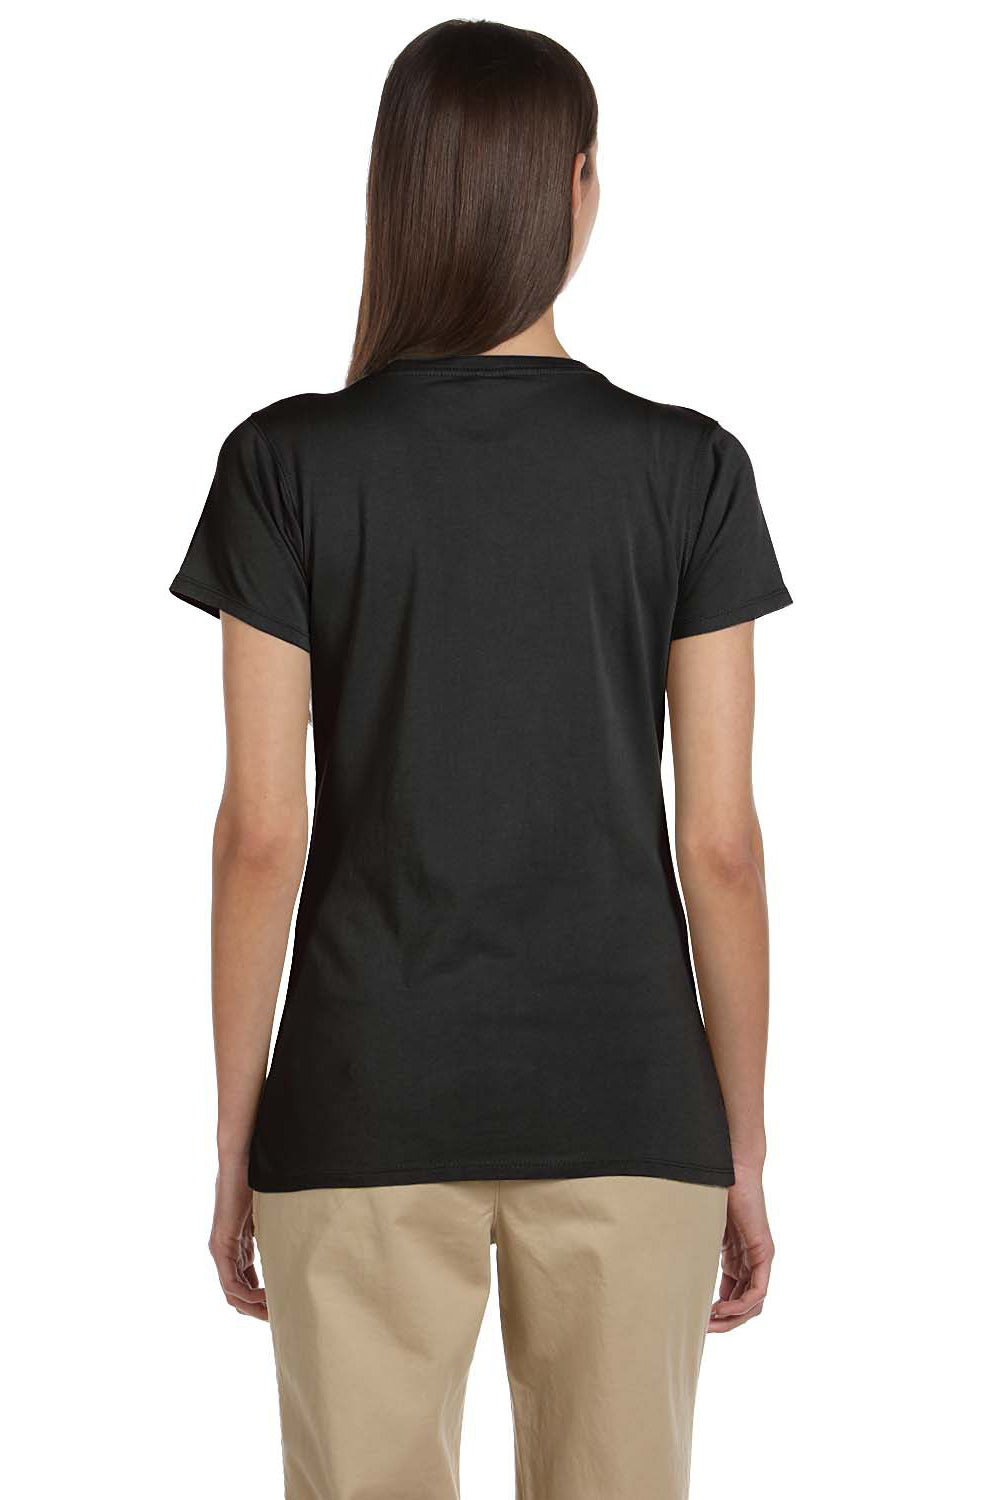 Econscious EC3052 Womens Short Sleeve V-Neck T-Shirt Black Back